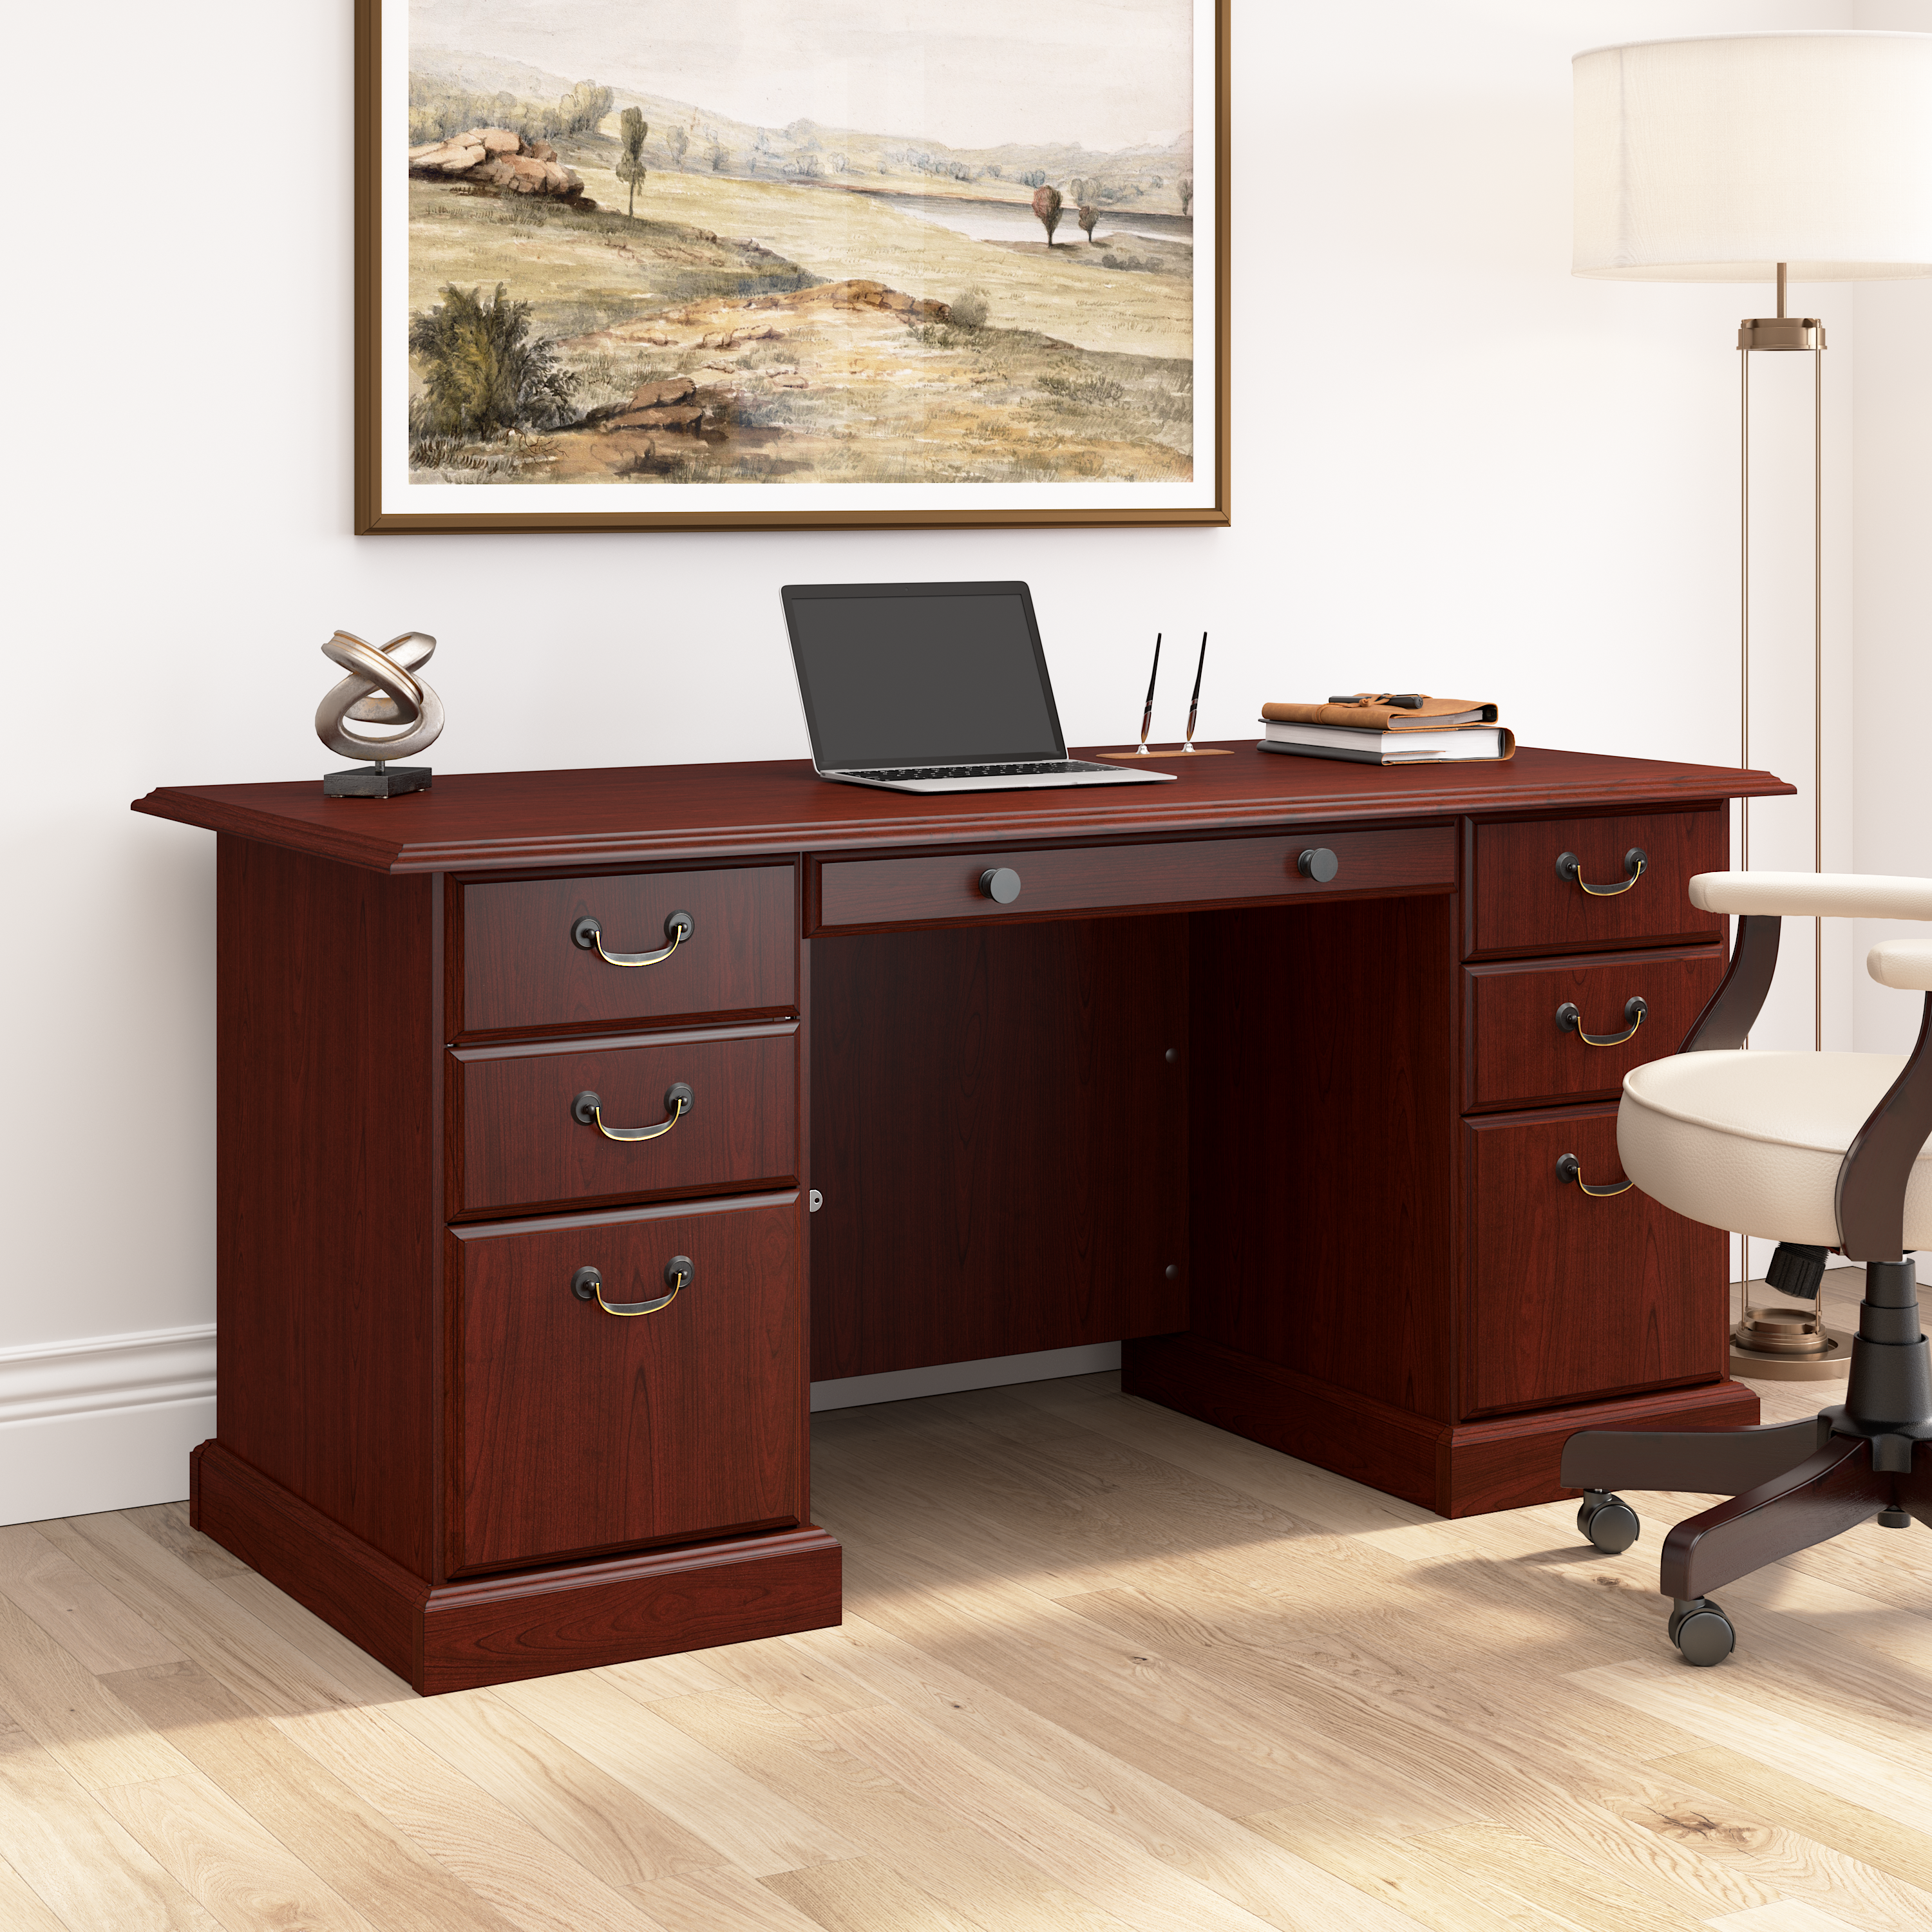 Shop Bush Business Furniture Arlington Executive Desk with Drawers 01 WC65566-03K #color_harvest cherry